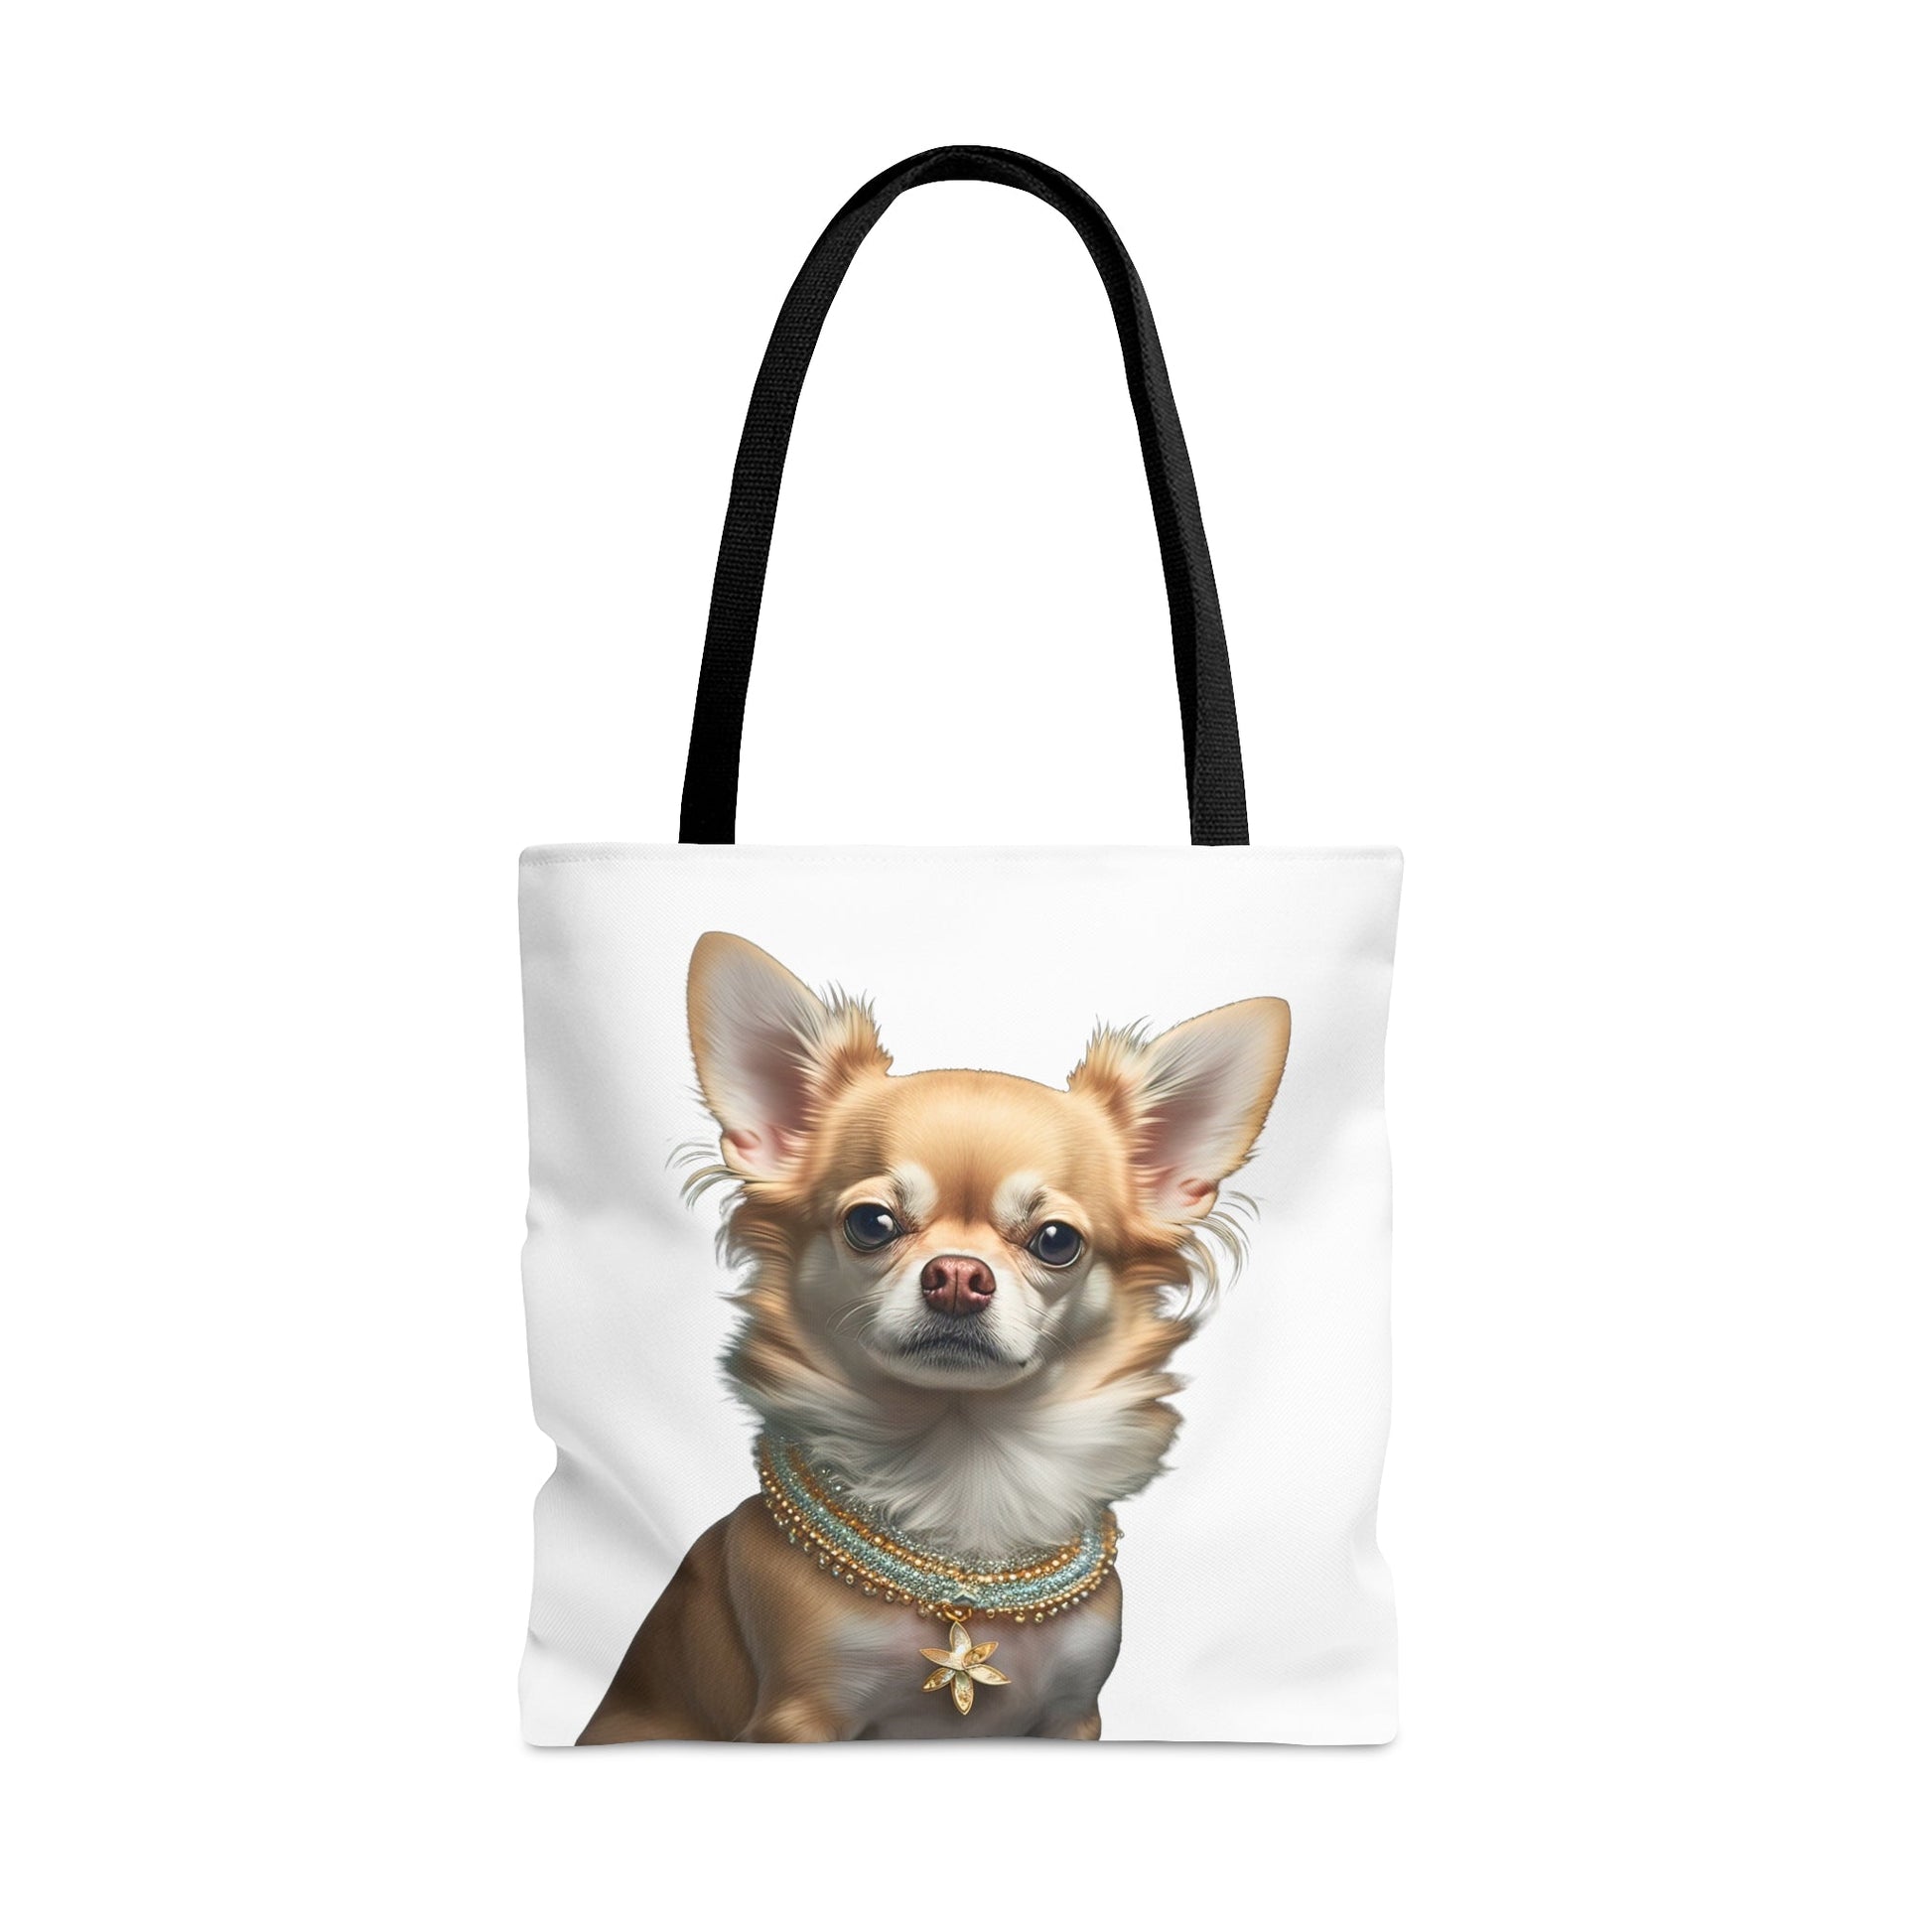 LEONRA Stylish Tote Bag | Chic Shoulder Bag